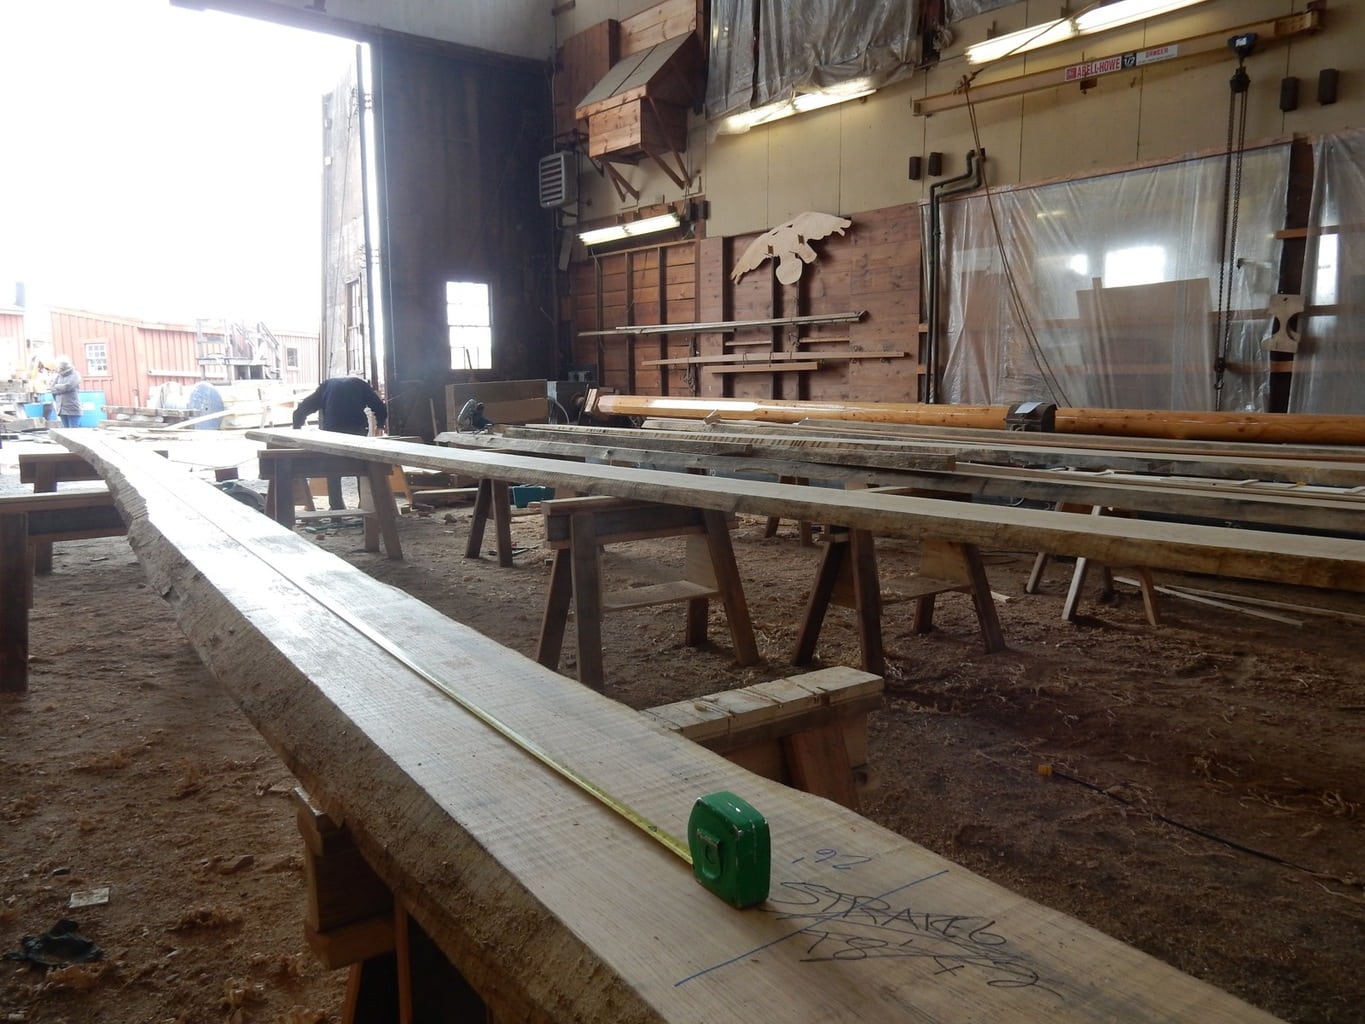 Getting planks of wood ready for Mayflower II Restoration